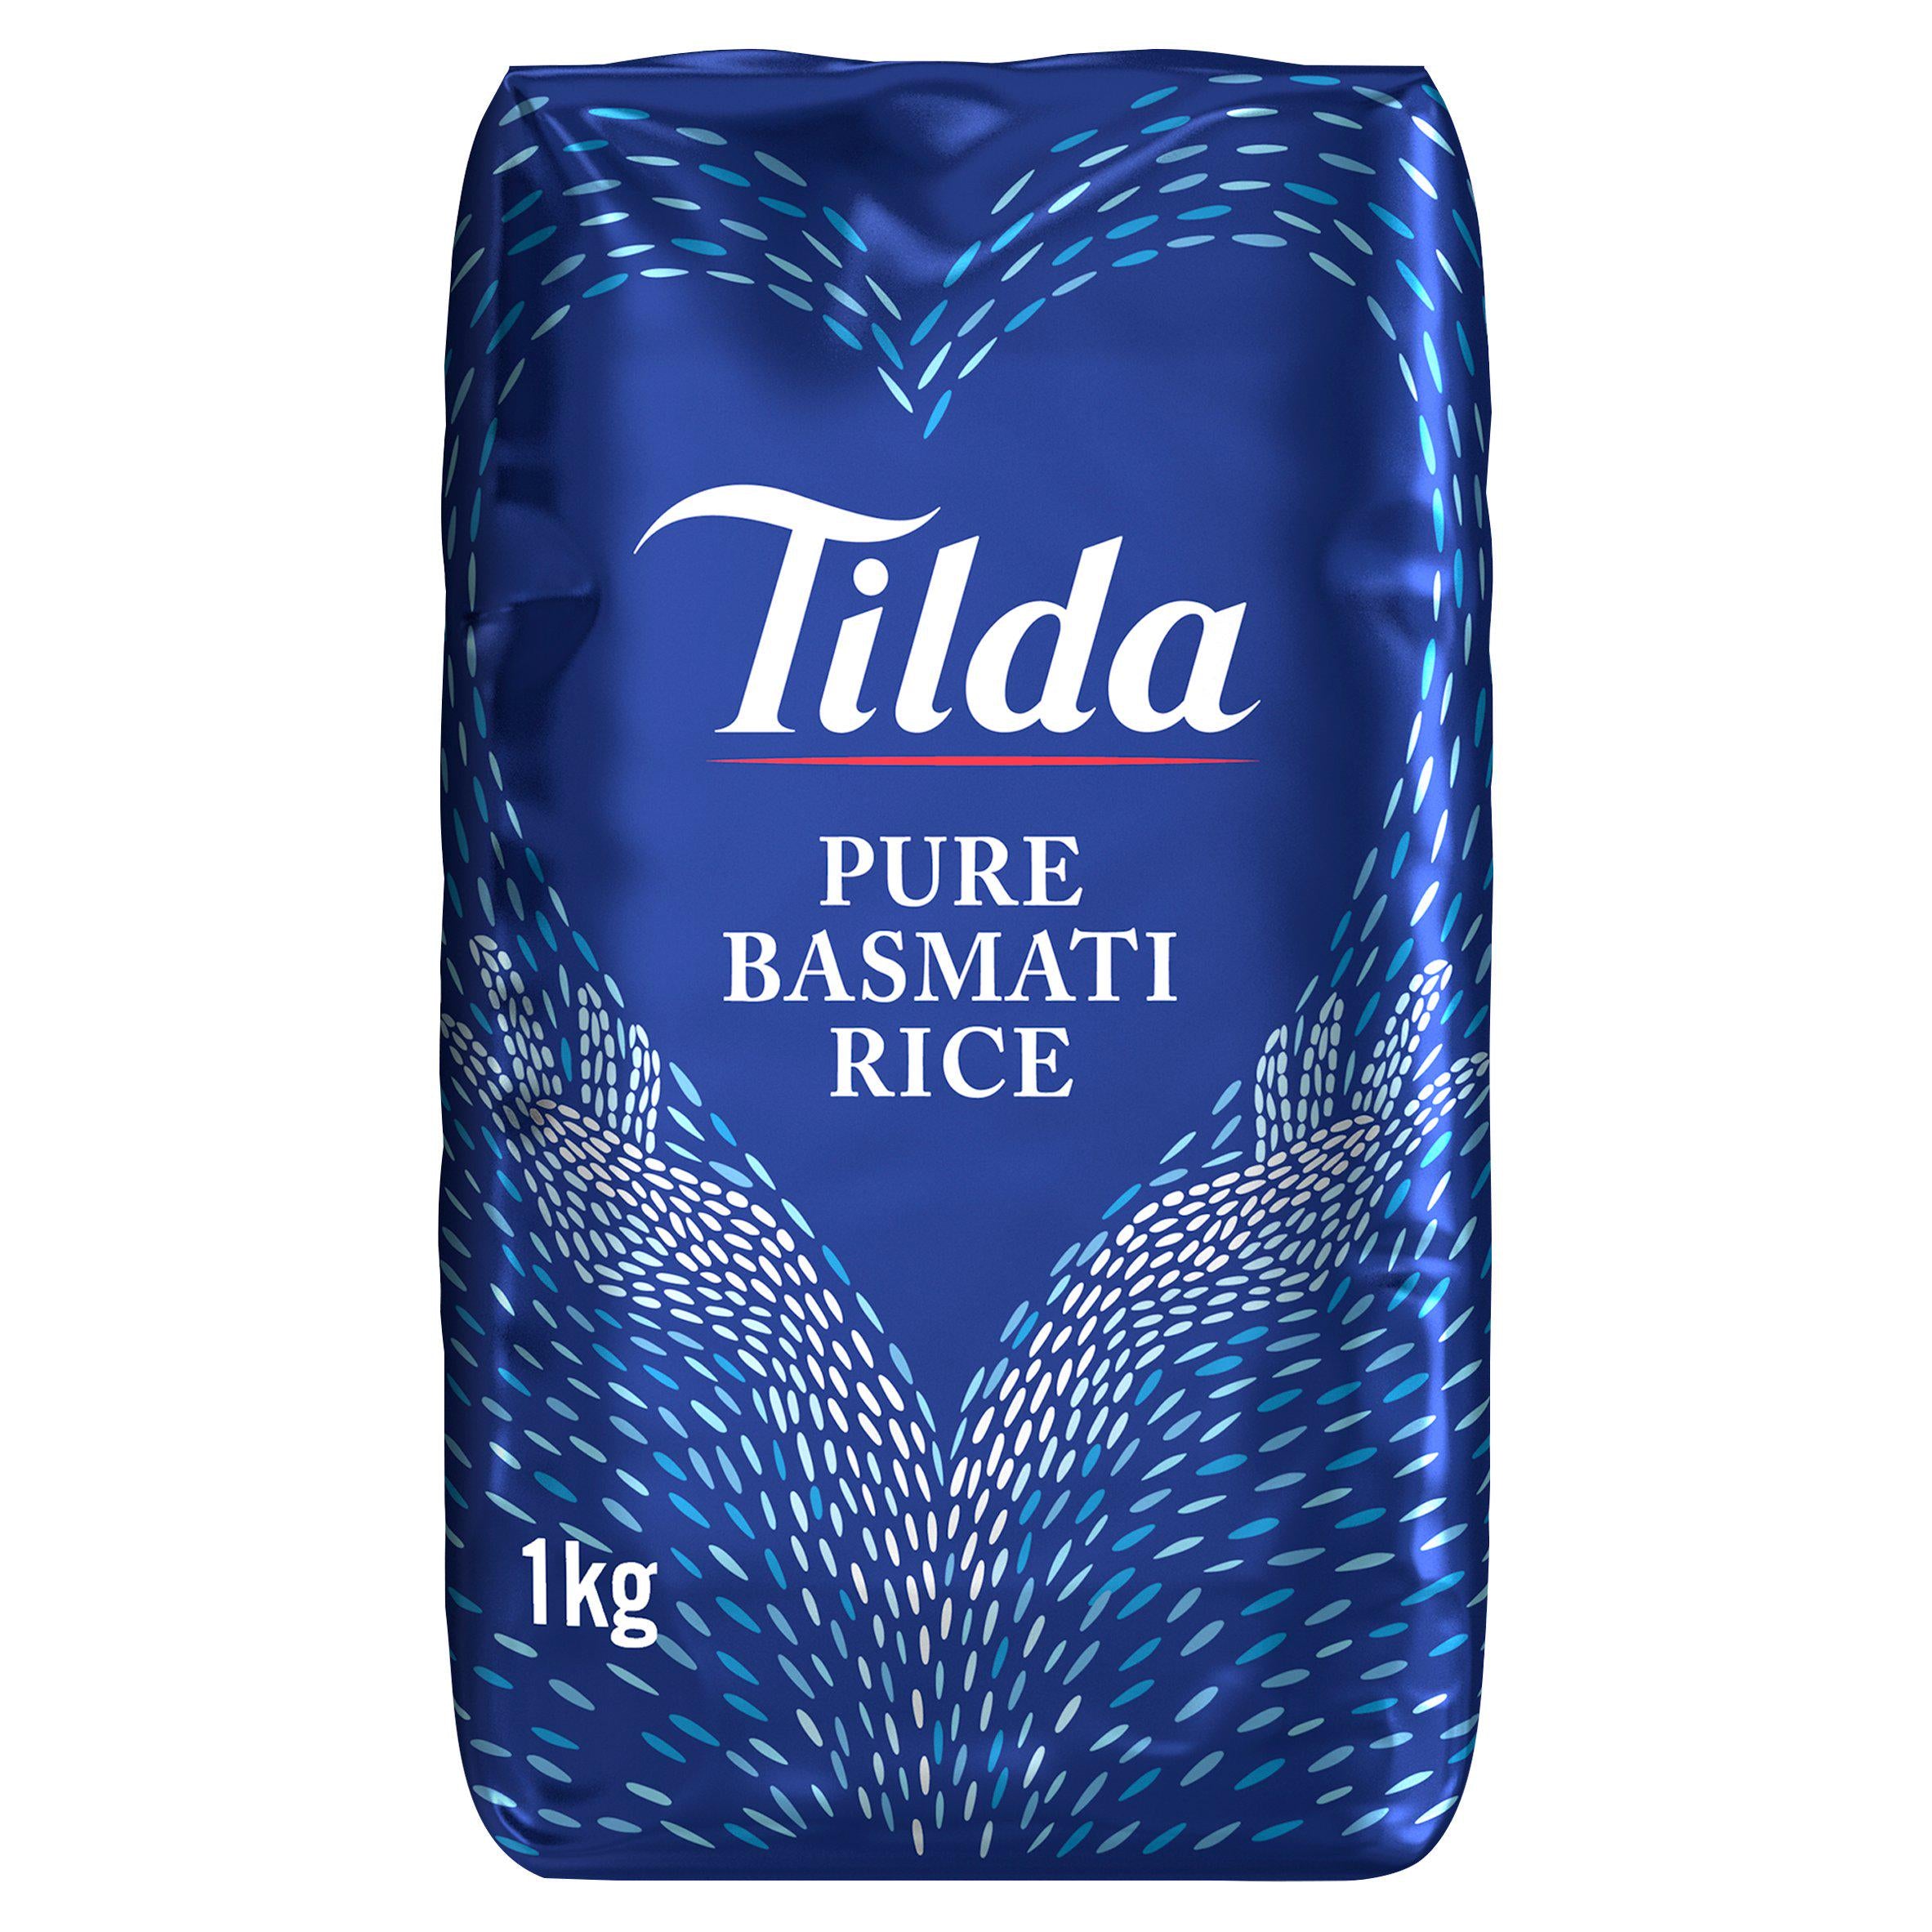 Tilda Pure Basmati Rice 1kg rice Sainsburys   